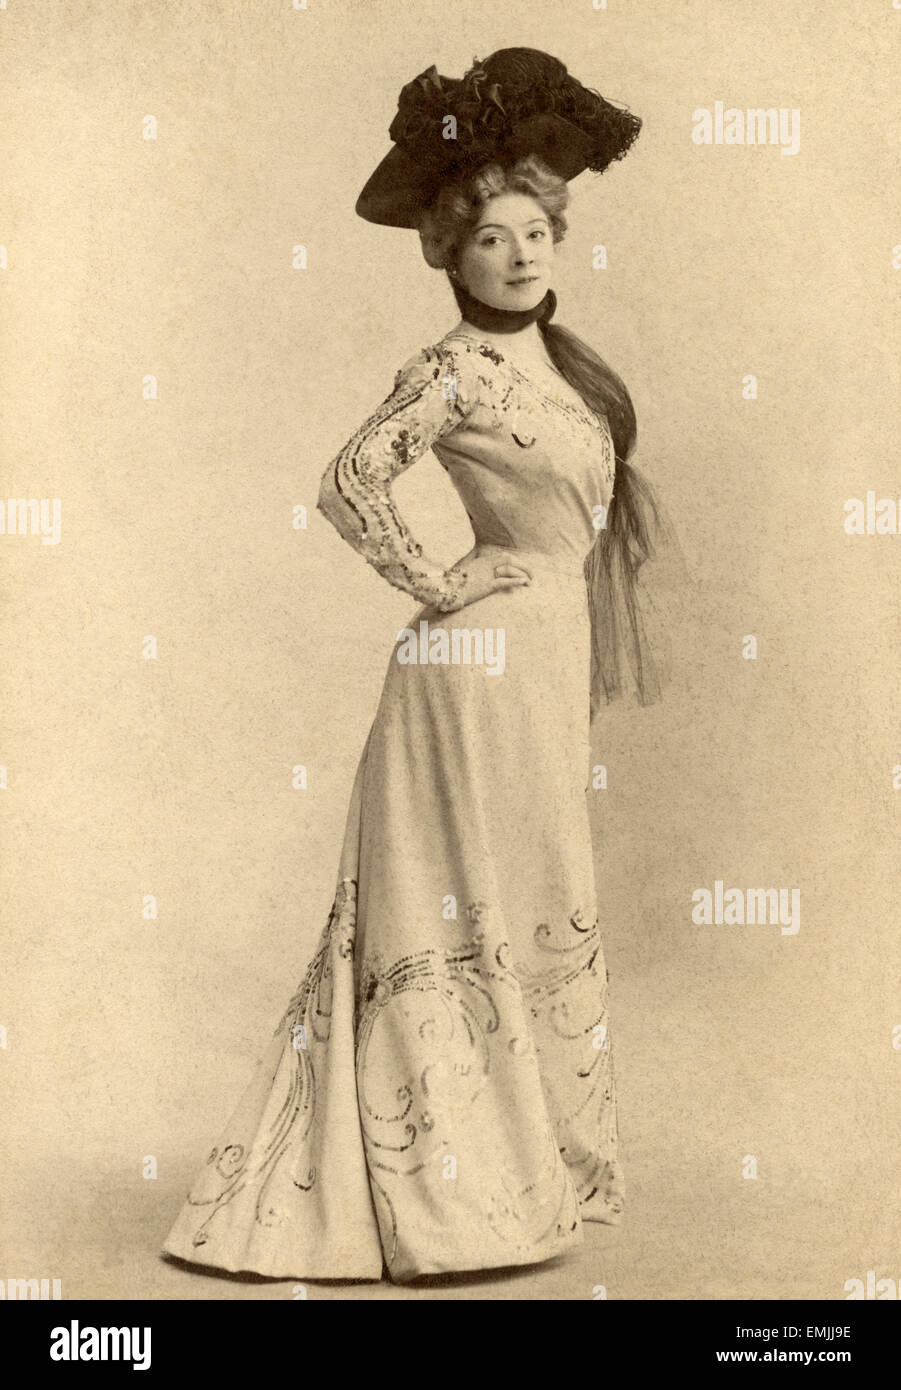 L'attrice francese Amelie Dieterle, Ritratto, Reutllnger, Parigi, Francia, circa 1898 Foto Stock